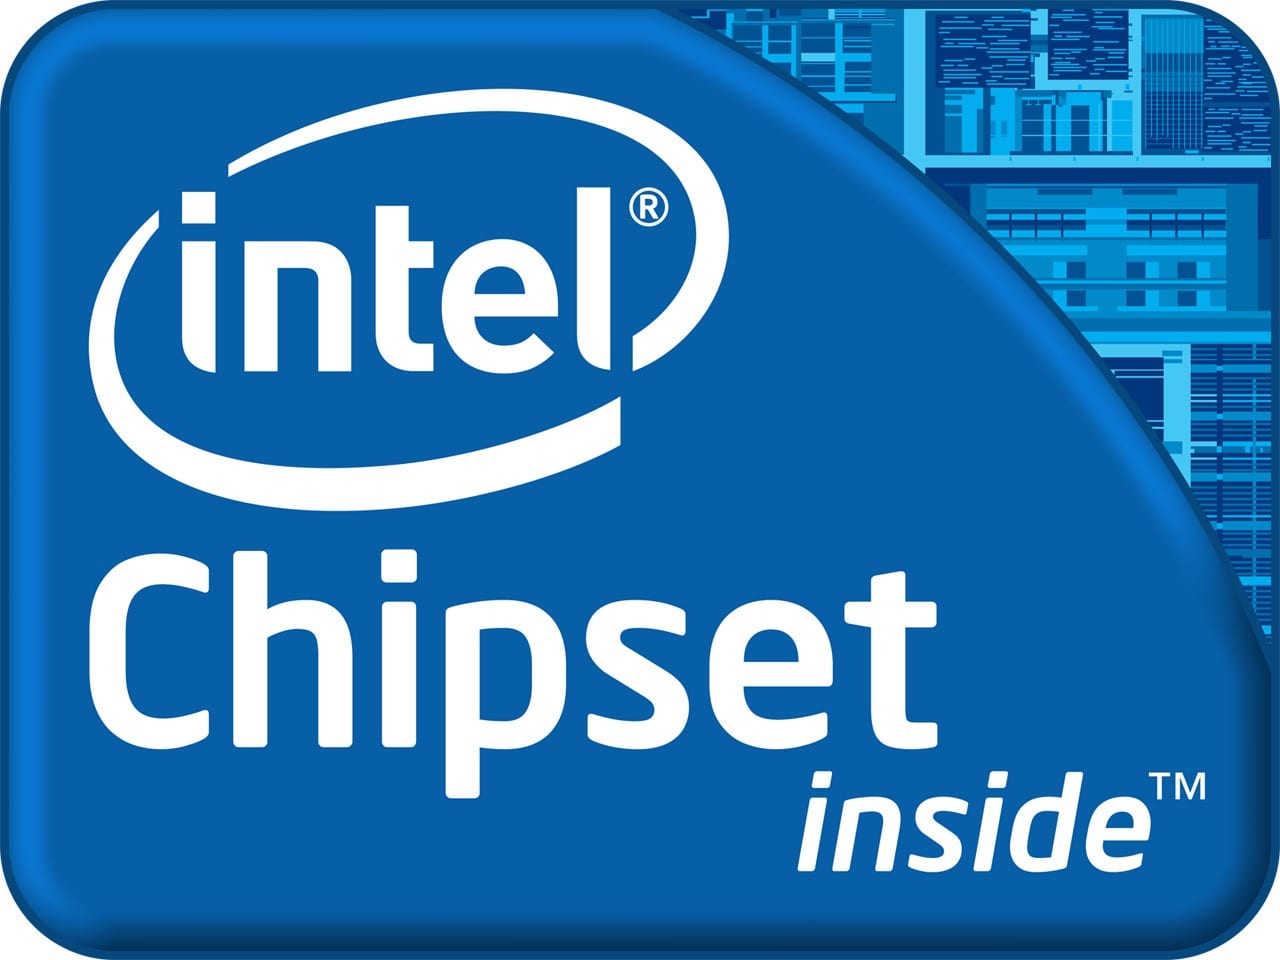 Intel mobile graphic. Интел. Логотип Intel. Чипсеты Интел. Значок Интел инсайд.